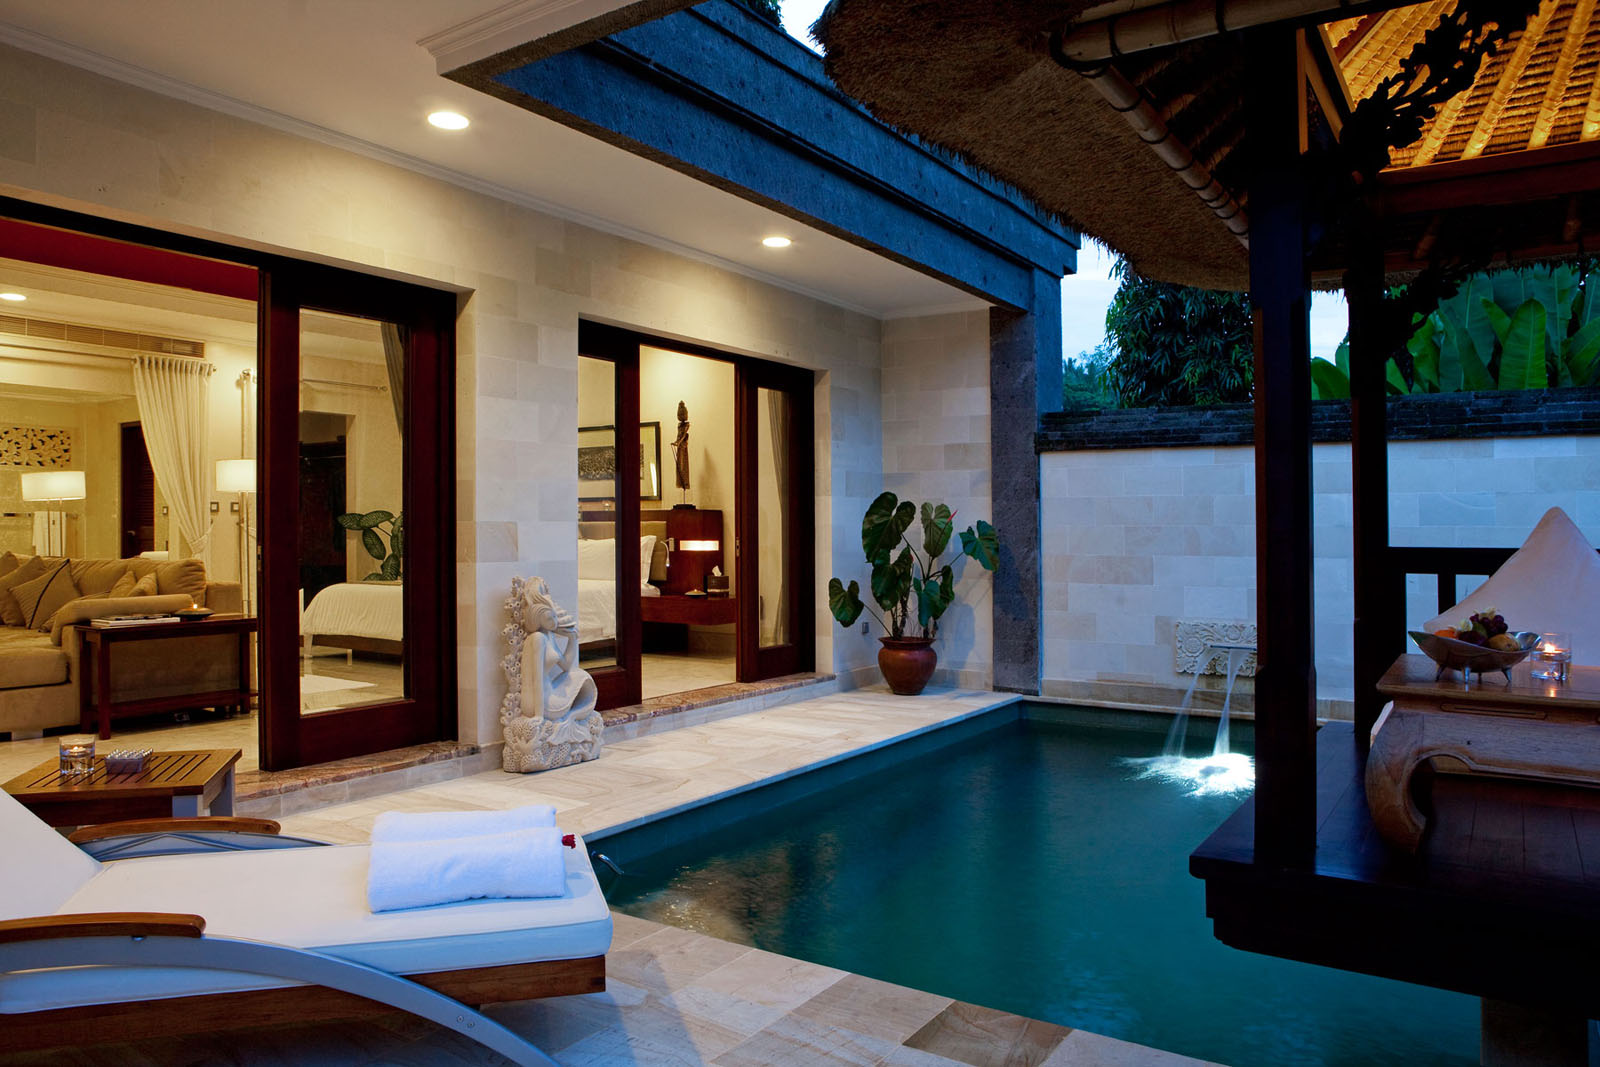 Romantic Viceroy Bali Resort In Ubud | iDesignArch | Interior Design ...
